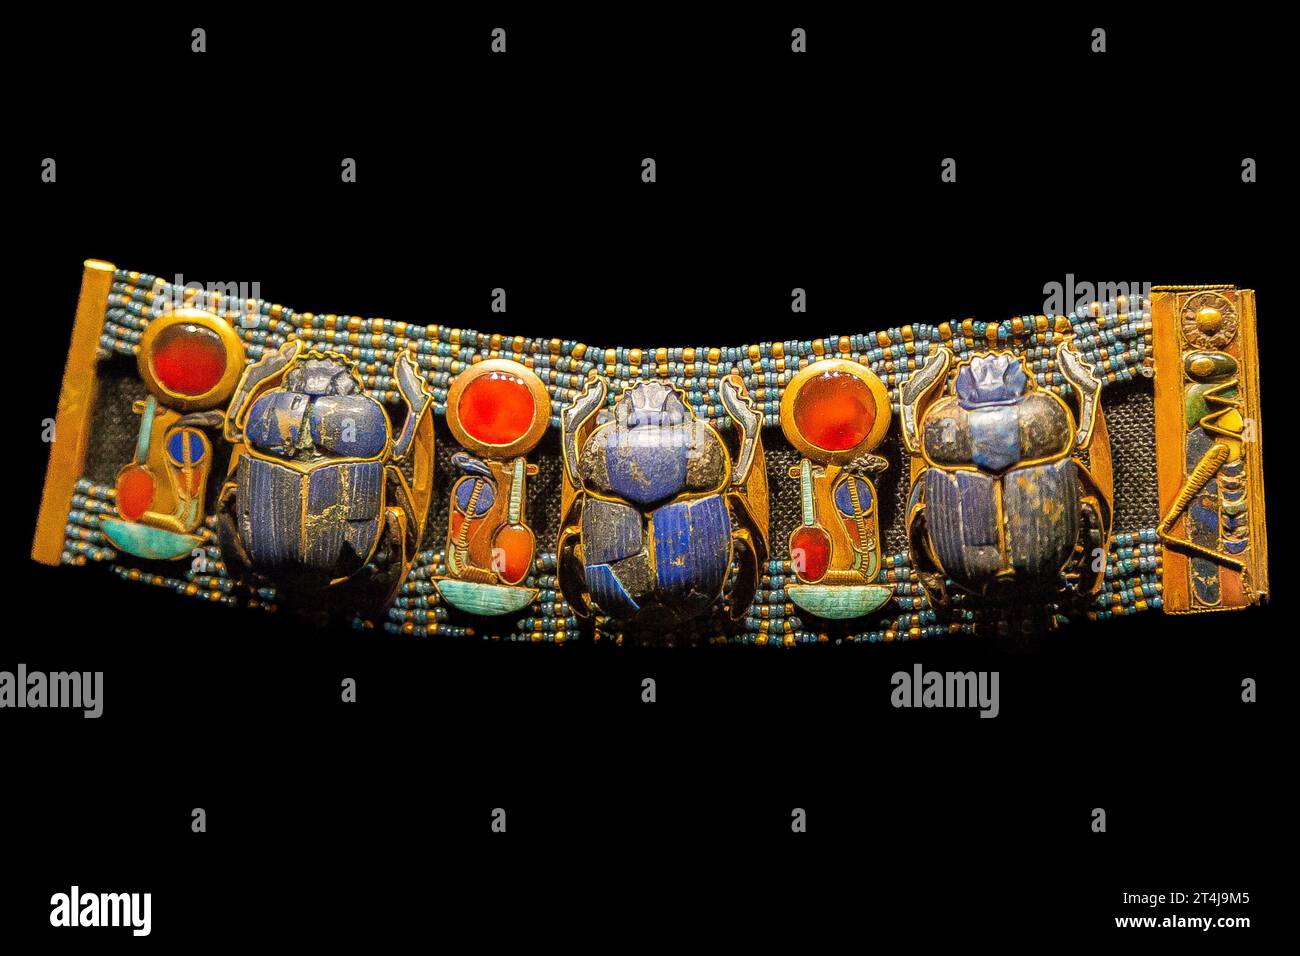 Illustration Of Cartouche Box From Tutankhamun's Tomb Digital Art by  Dorling Kindersley - Fine Art America